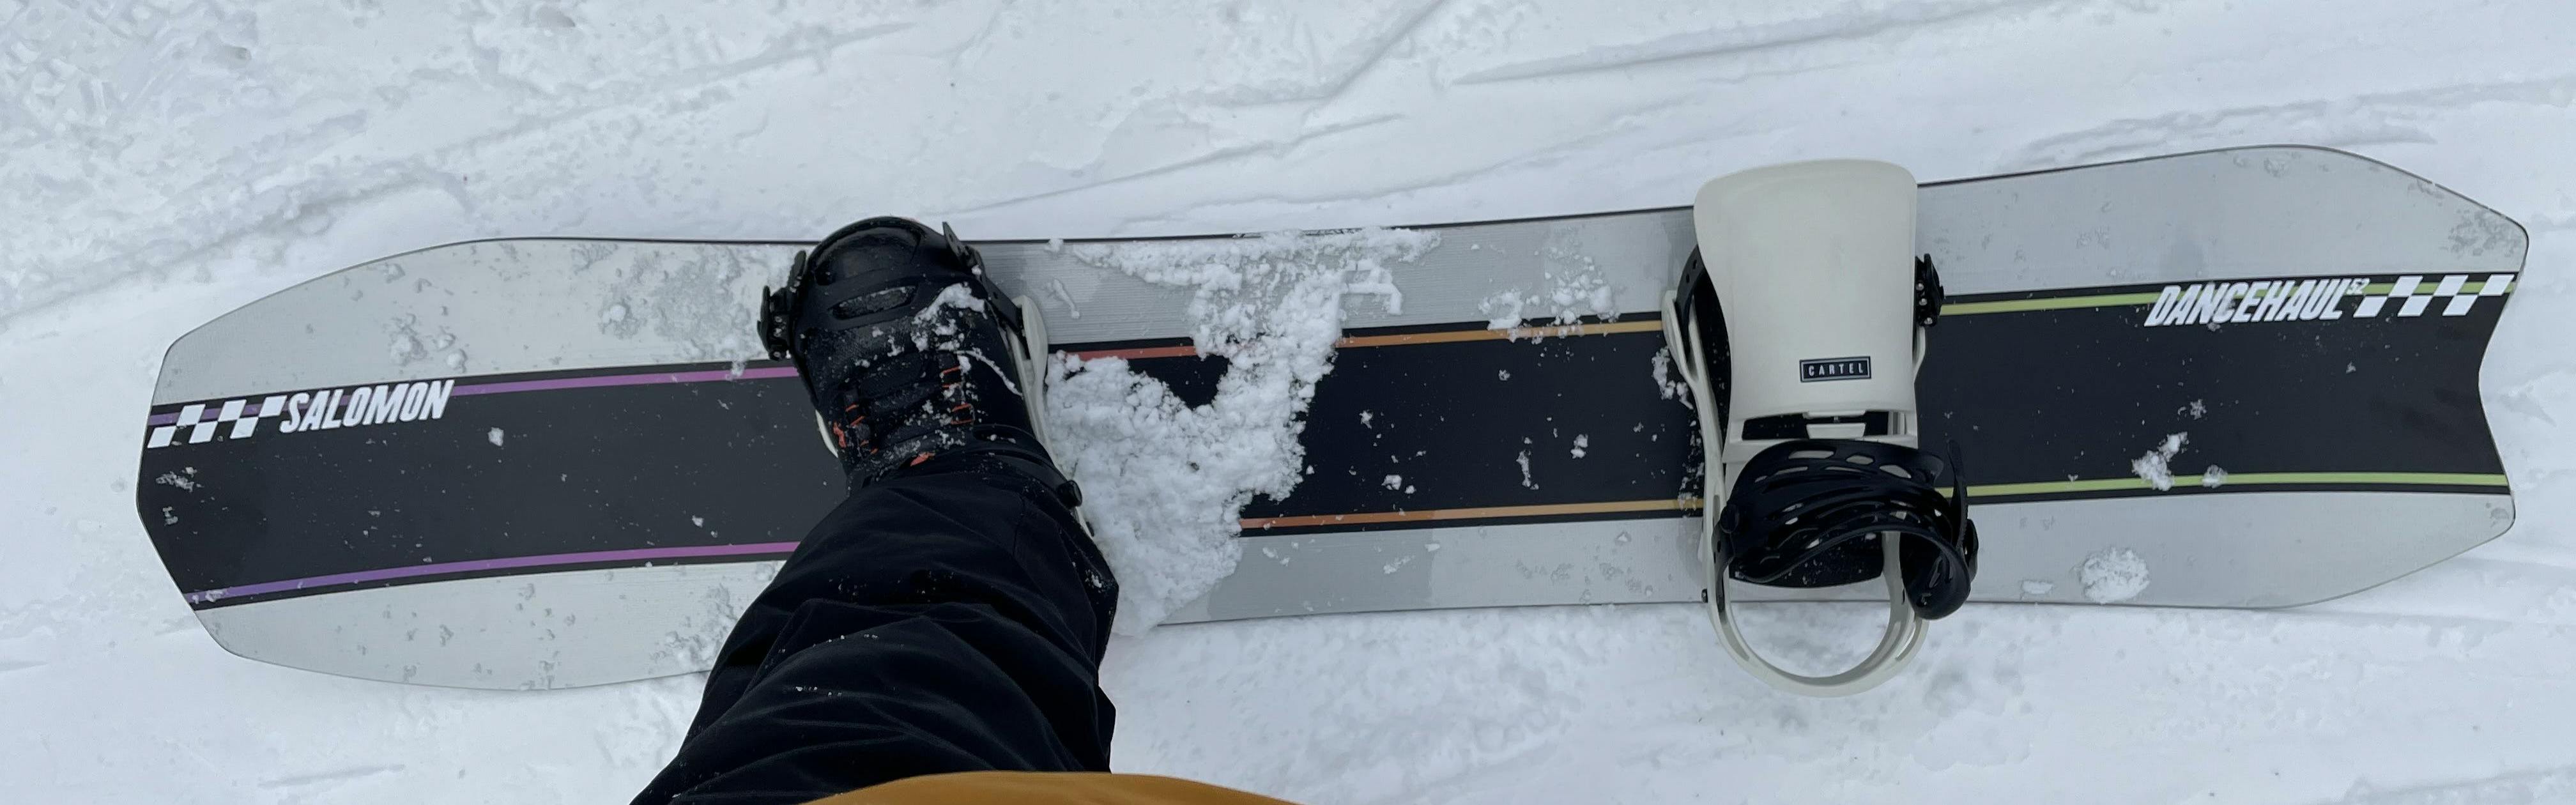 Top down photo of the Salomon Dancehaul Snowboard · 2022.